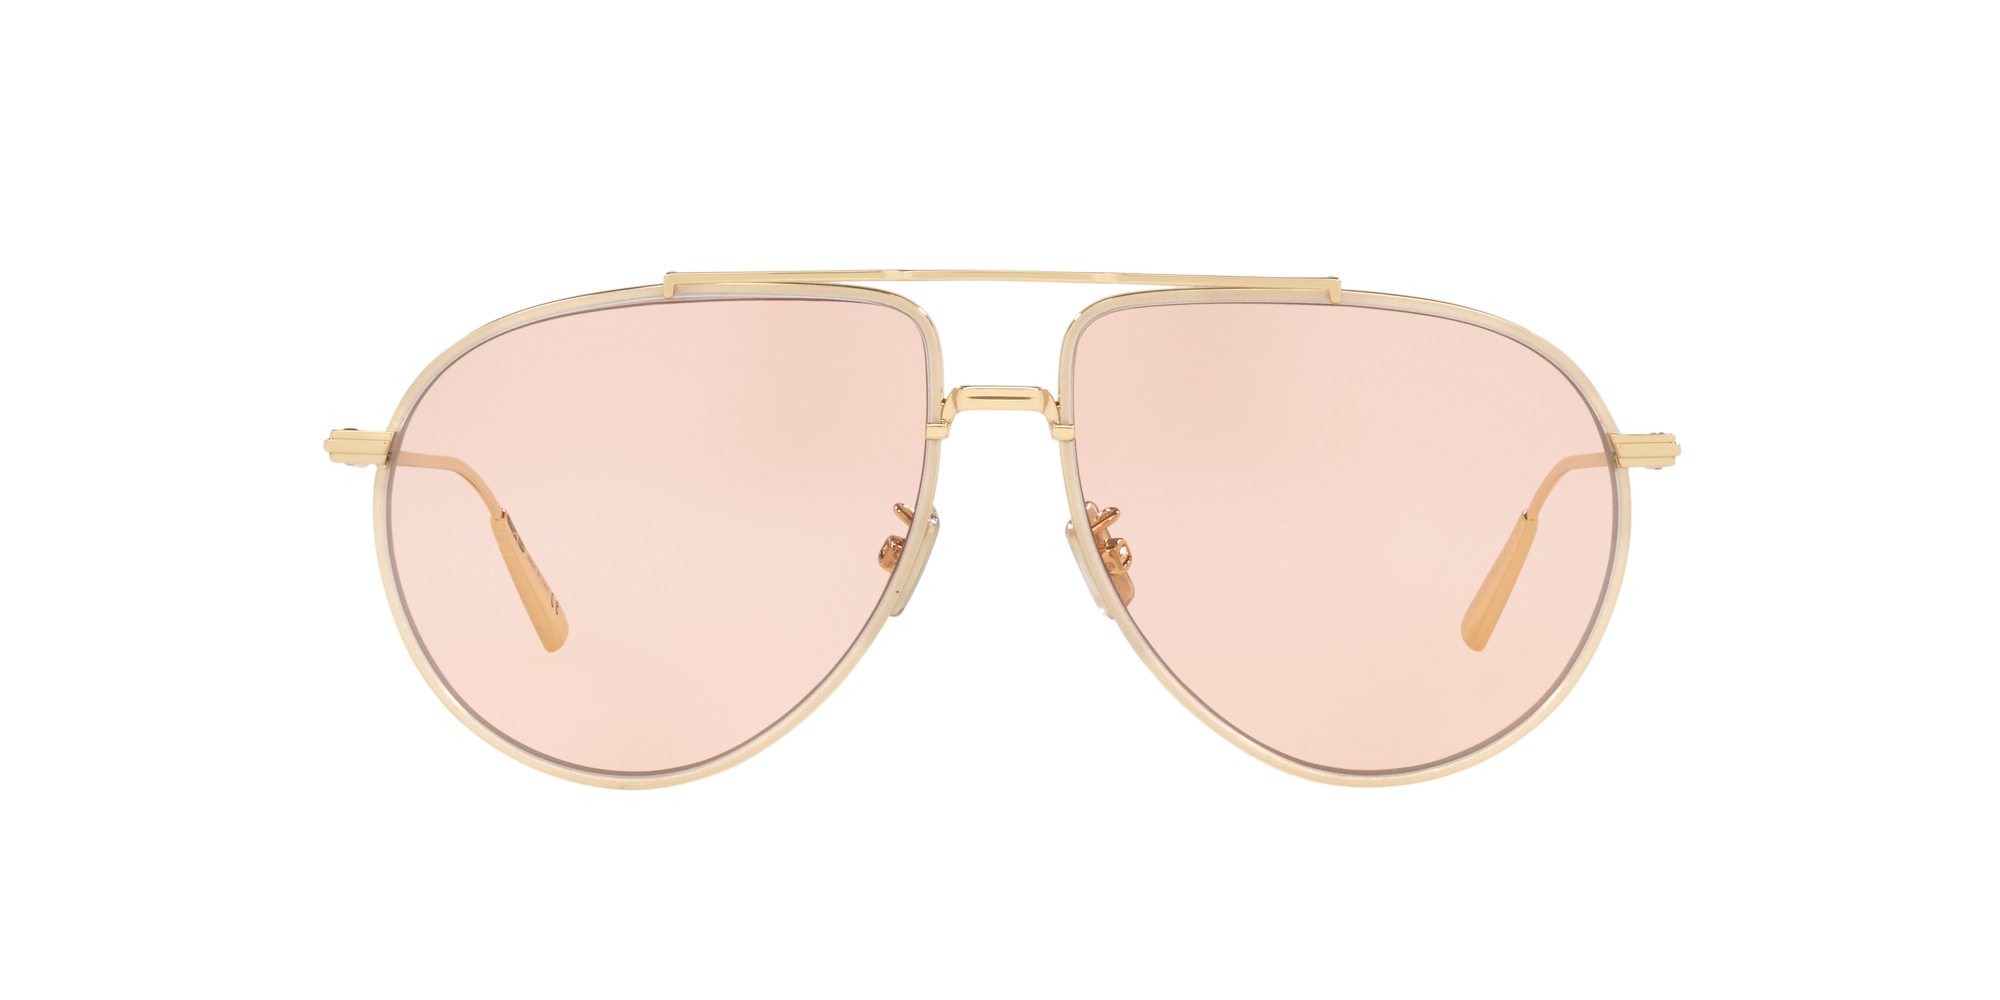 DIOR optical frames for woman  Pink  Dior optical frames MINI CD O S6I  online on GIGLIOCOM